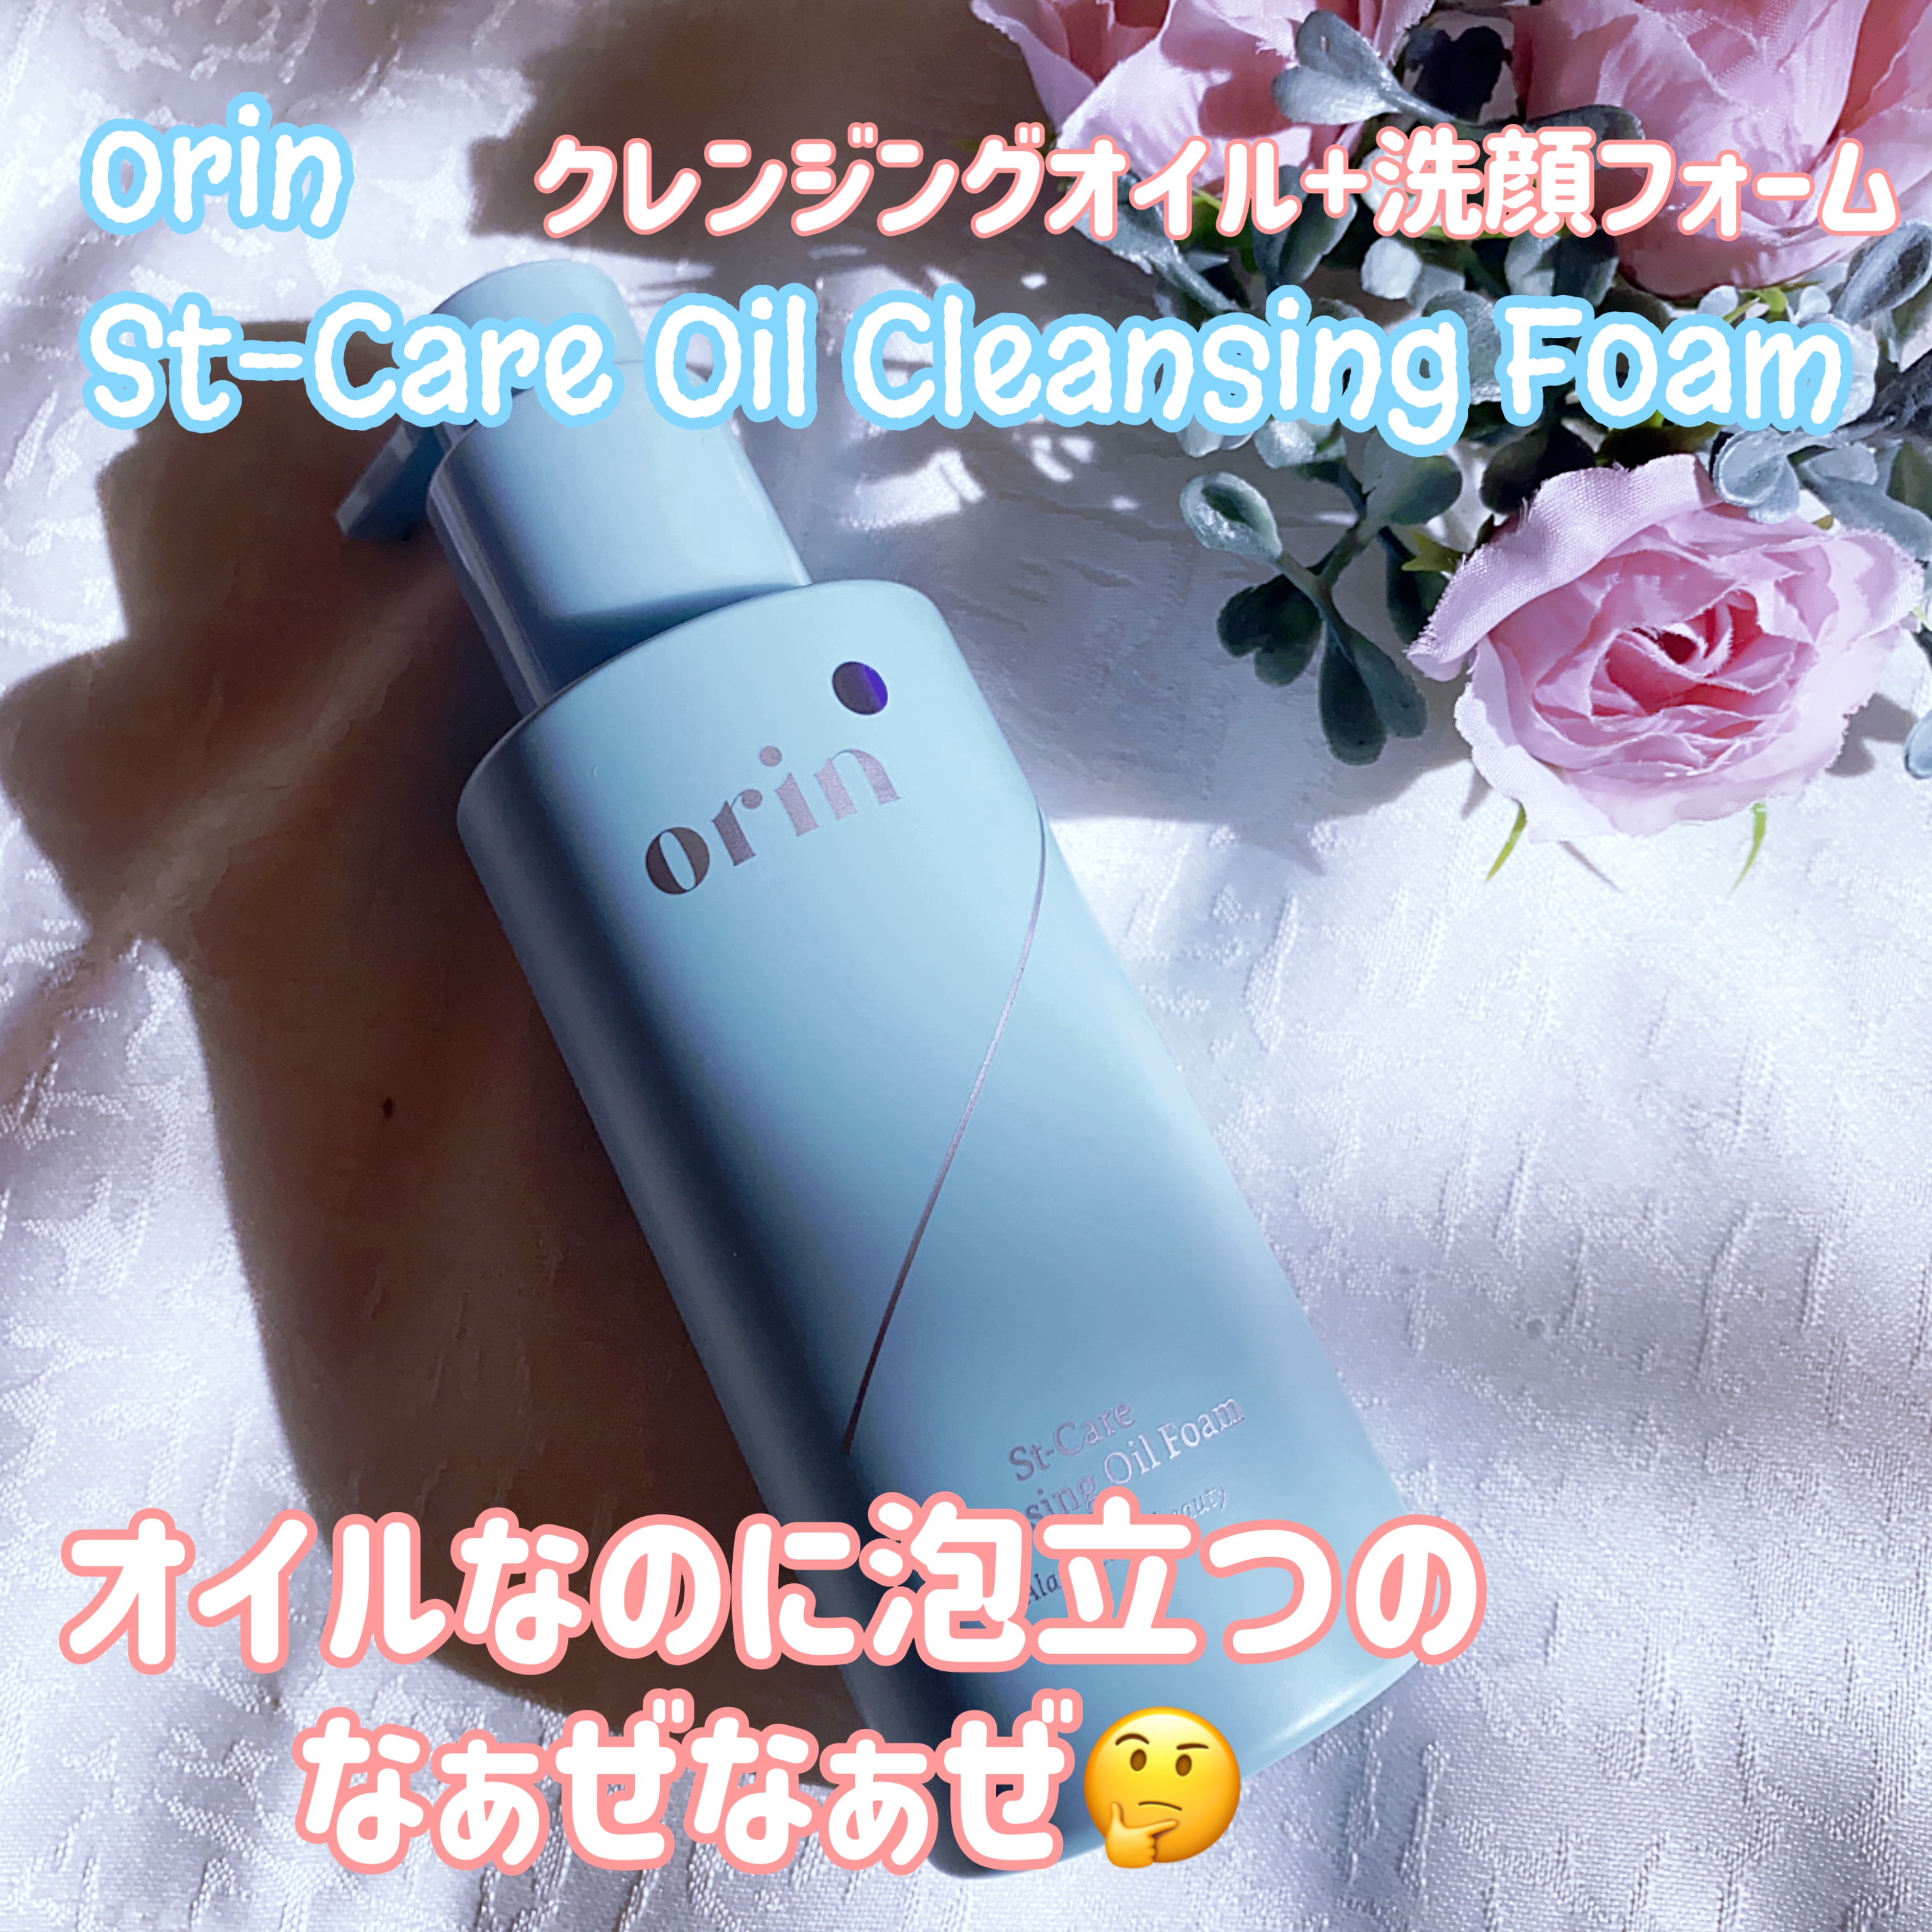 orin St-Care Oil Cleansing Foamを使った珈琲豆♡さんのクチコミ画像1